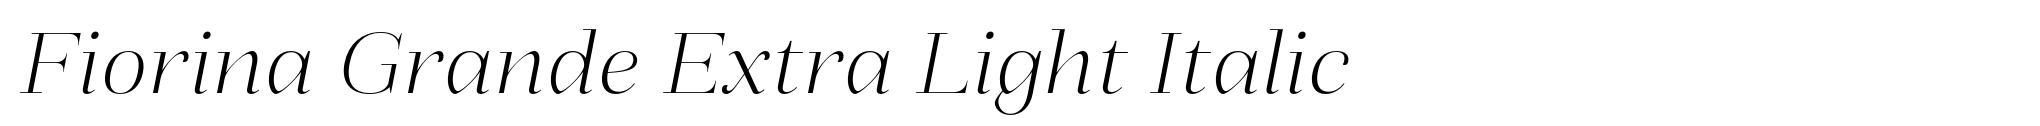 Fiorina Grande Extra Light Italic image